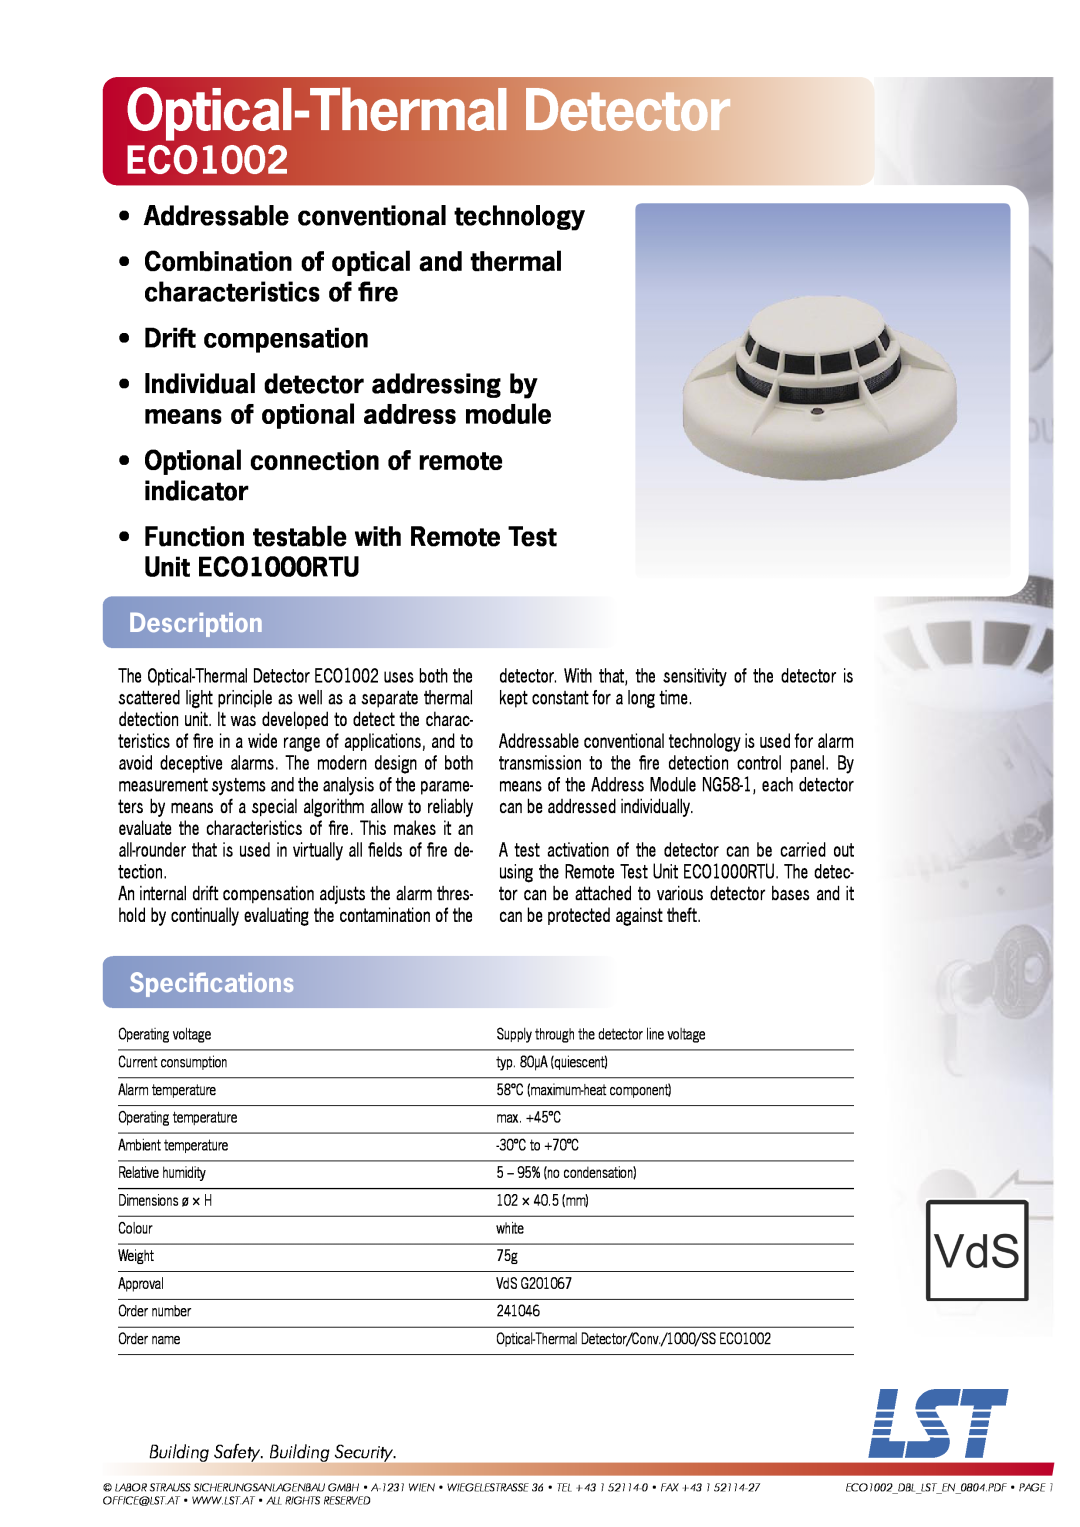 LST ECO1002 specifications Optical-ThermalDetector, Addressable conventional technology, Drift compensation, Description 